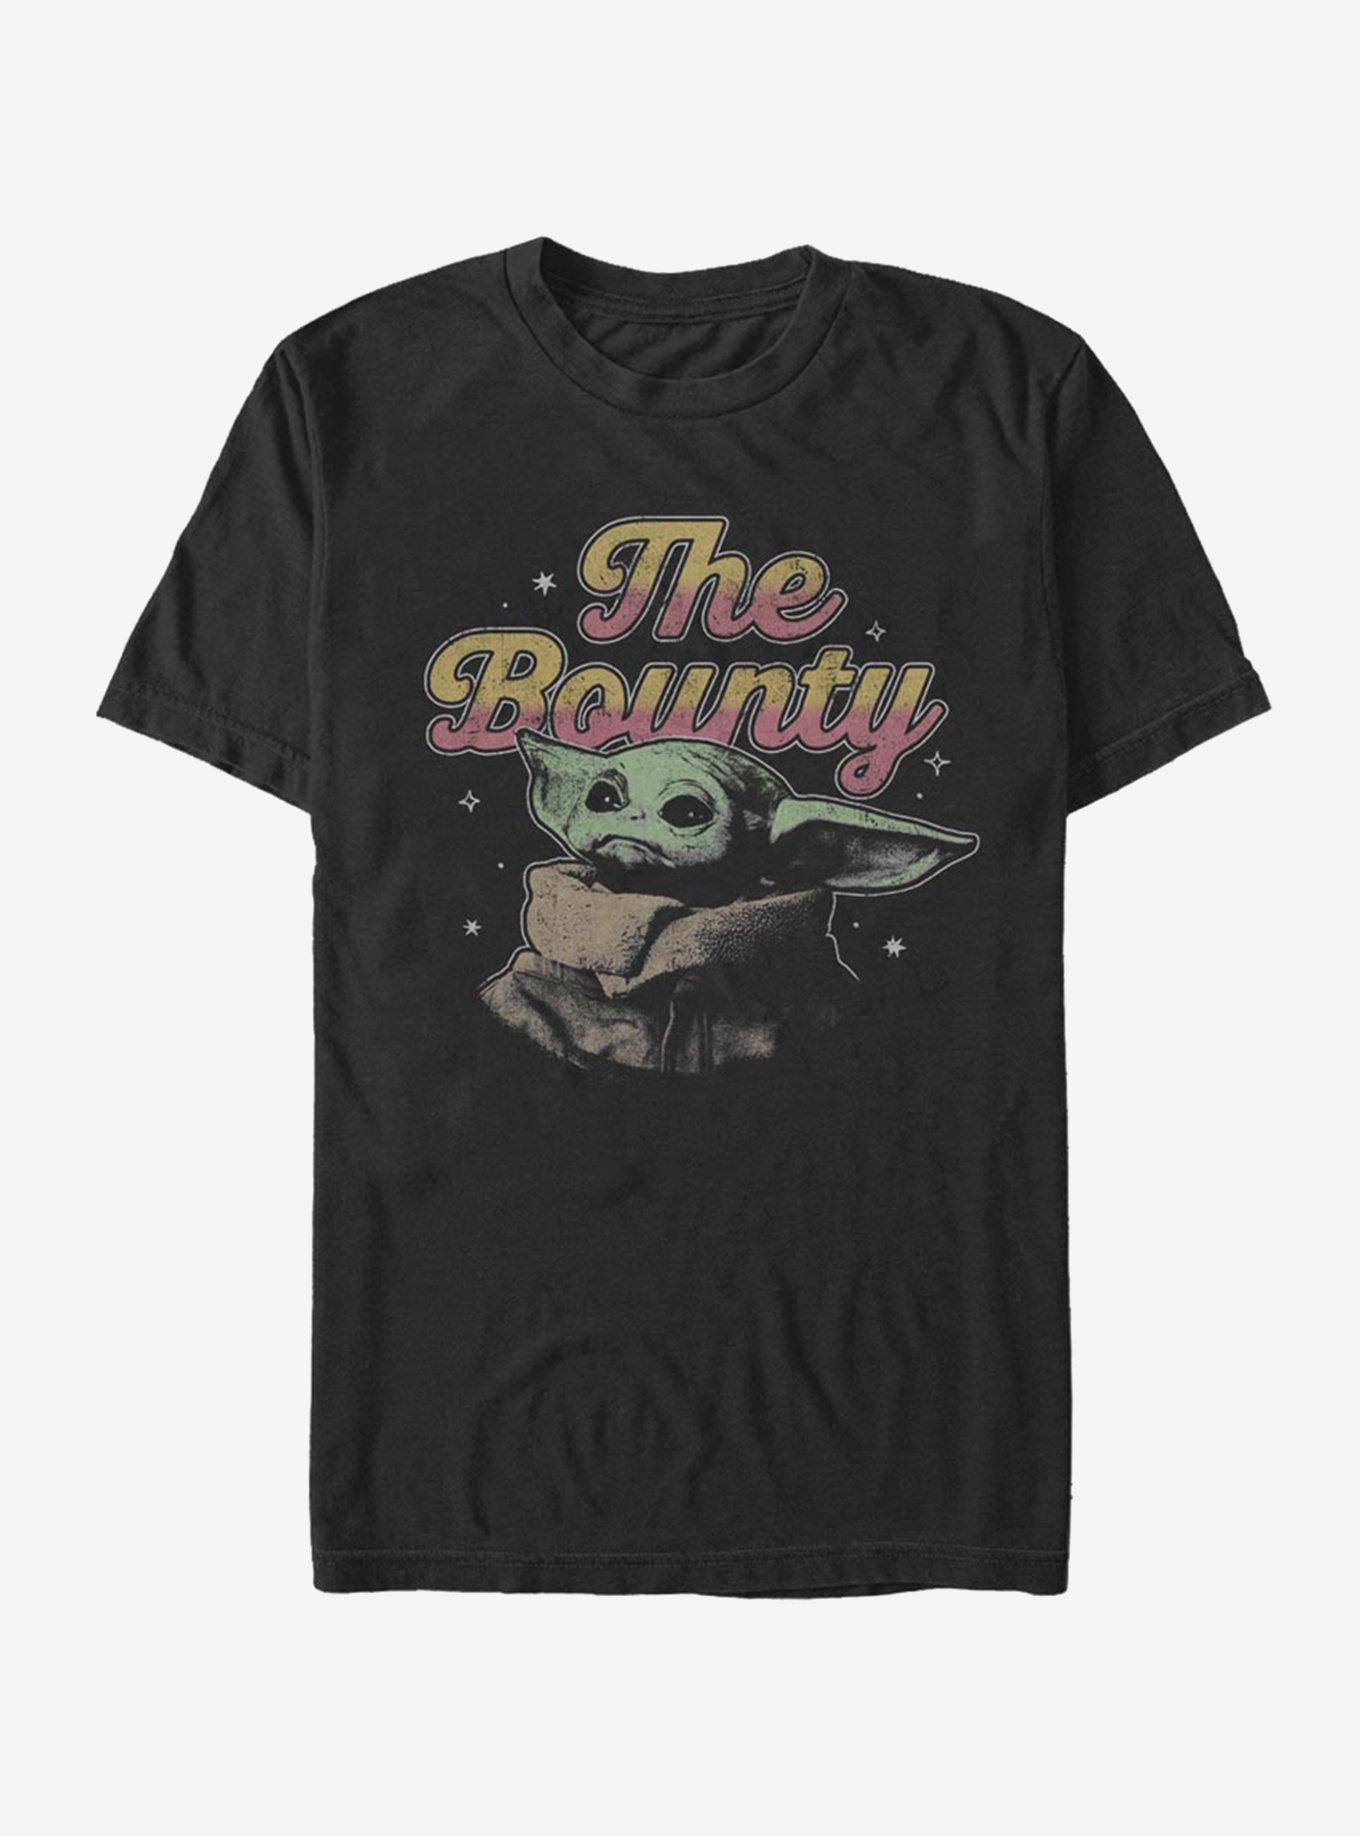 Star Wars The Mandalorian Bounty T-Shirt